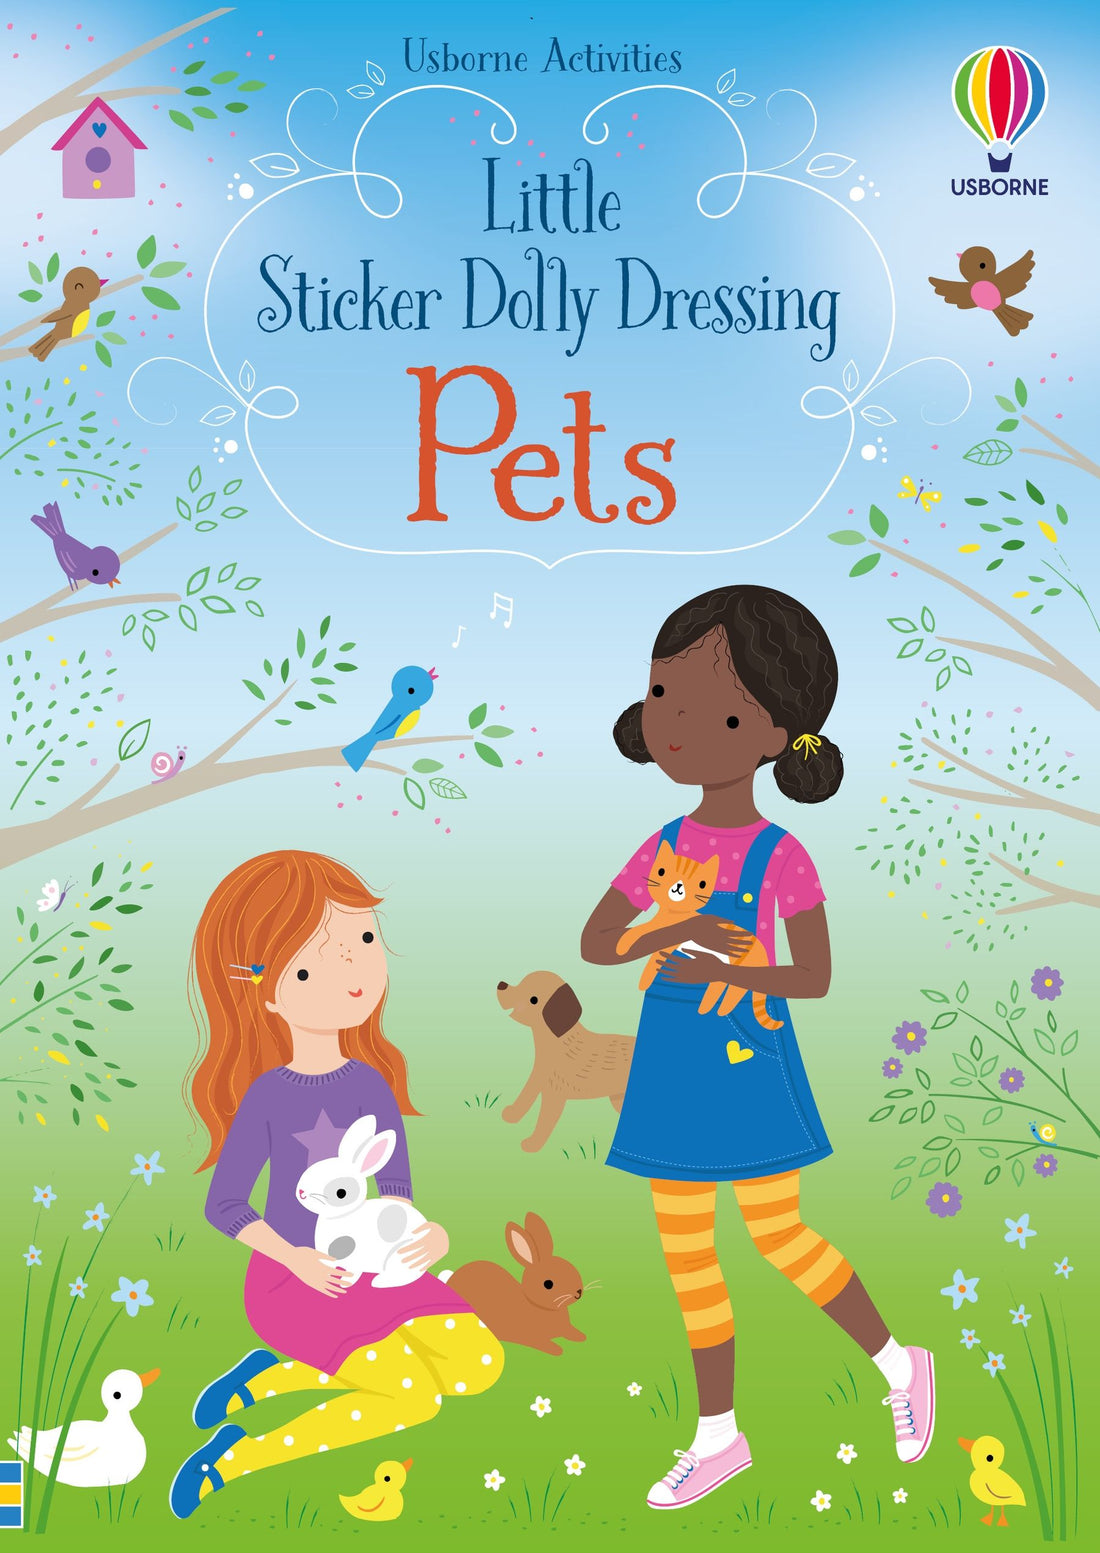 Little Sticker Dolly Dressing -Pets